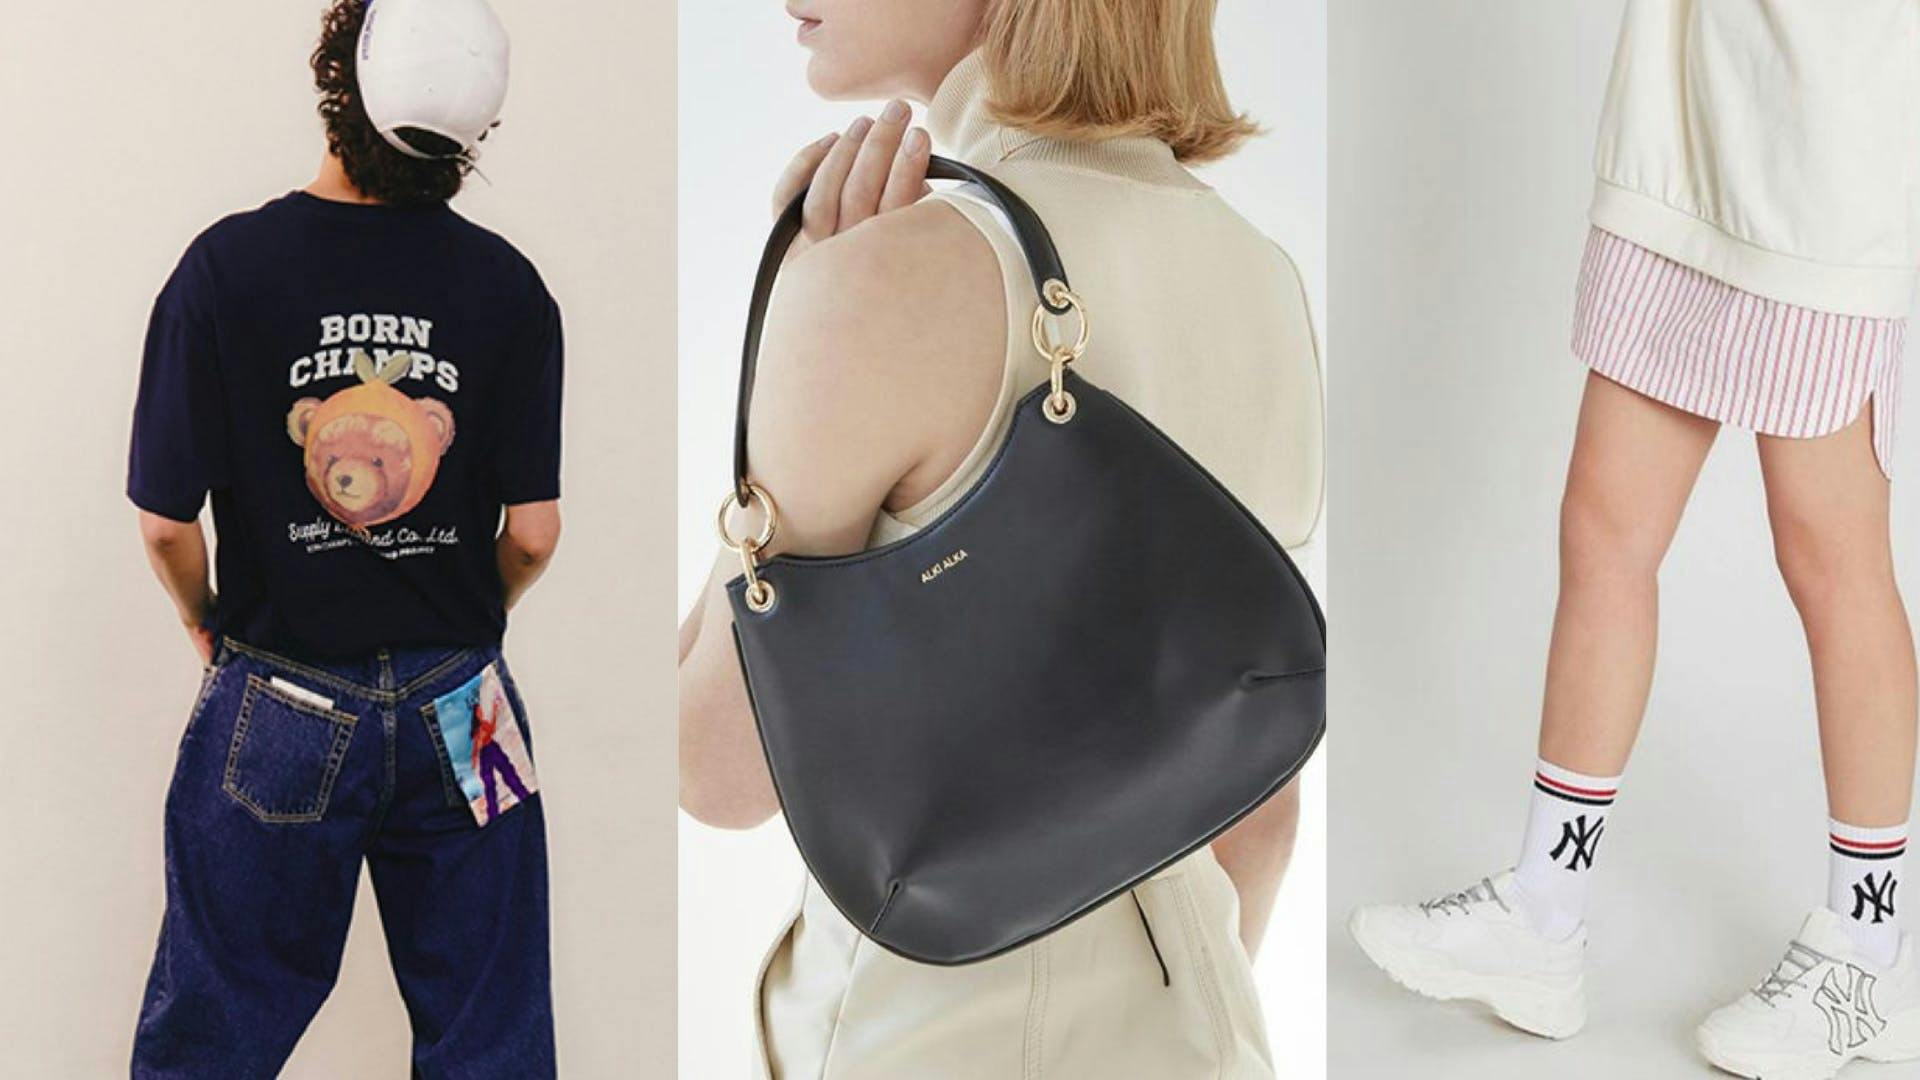 person human handbag accessories bag accessory helmet clothing apparel purse